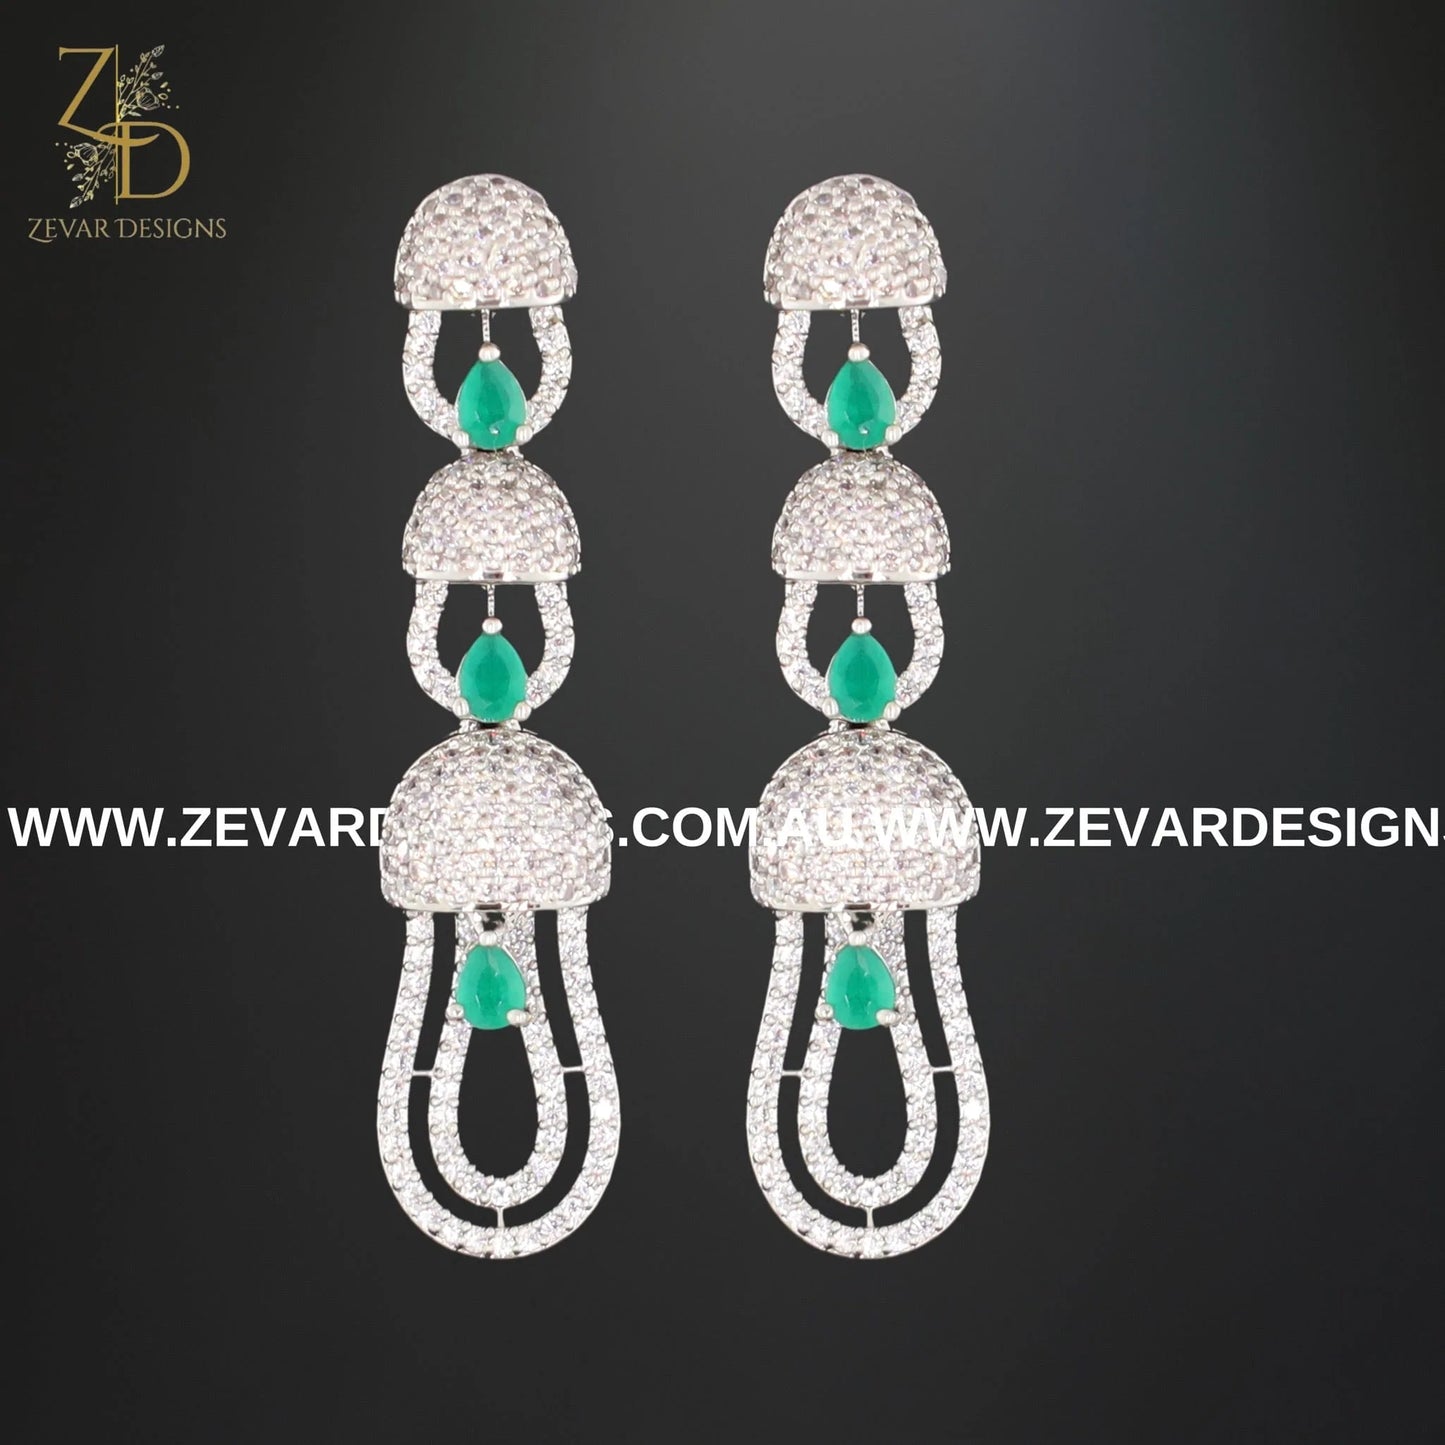 Zevar Designs Necklace Sets - AD AD/Zircon Necklace Set - White Rhodium and Emerald